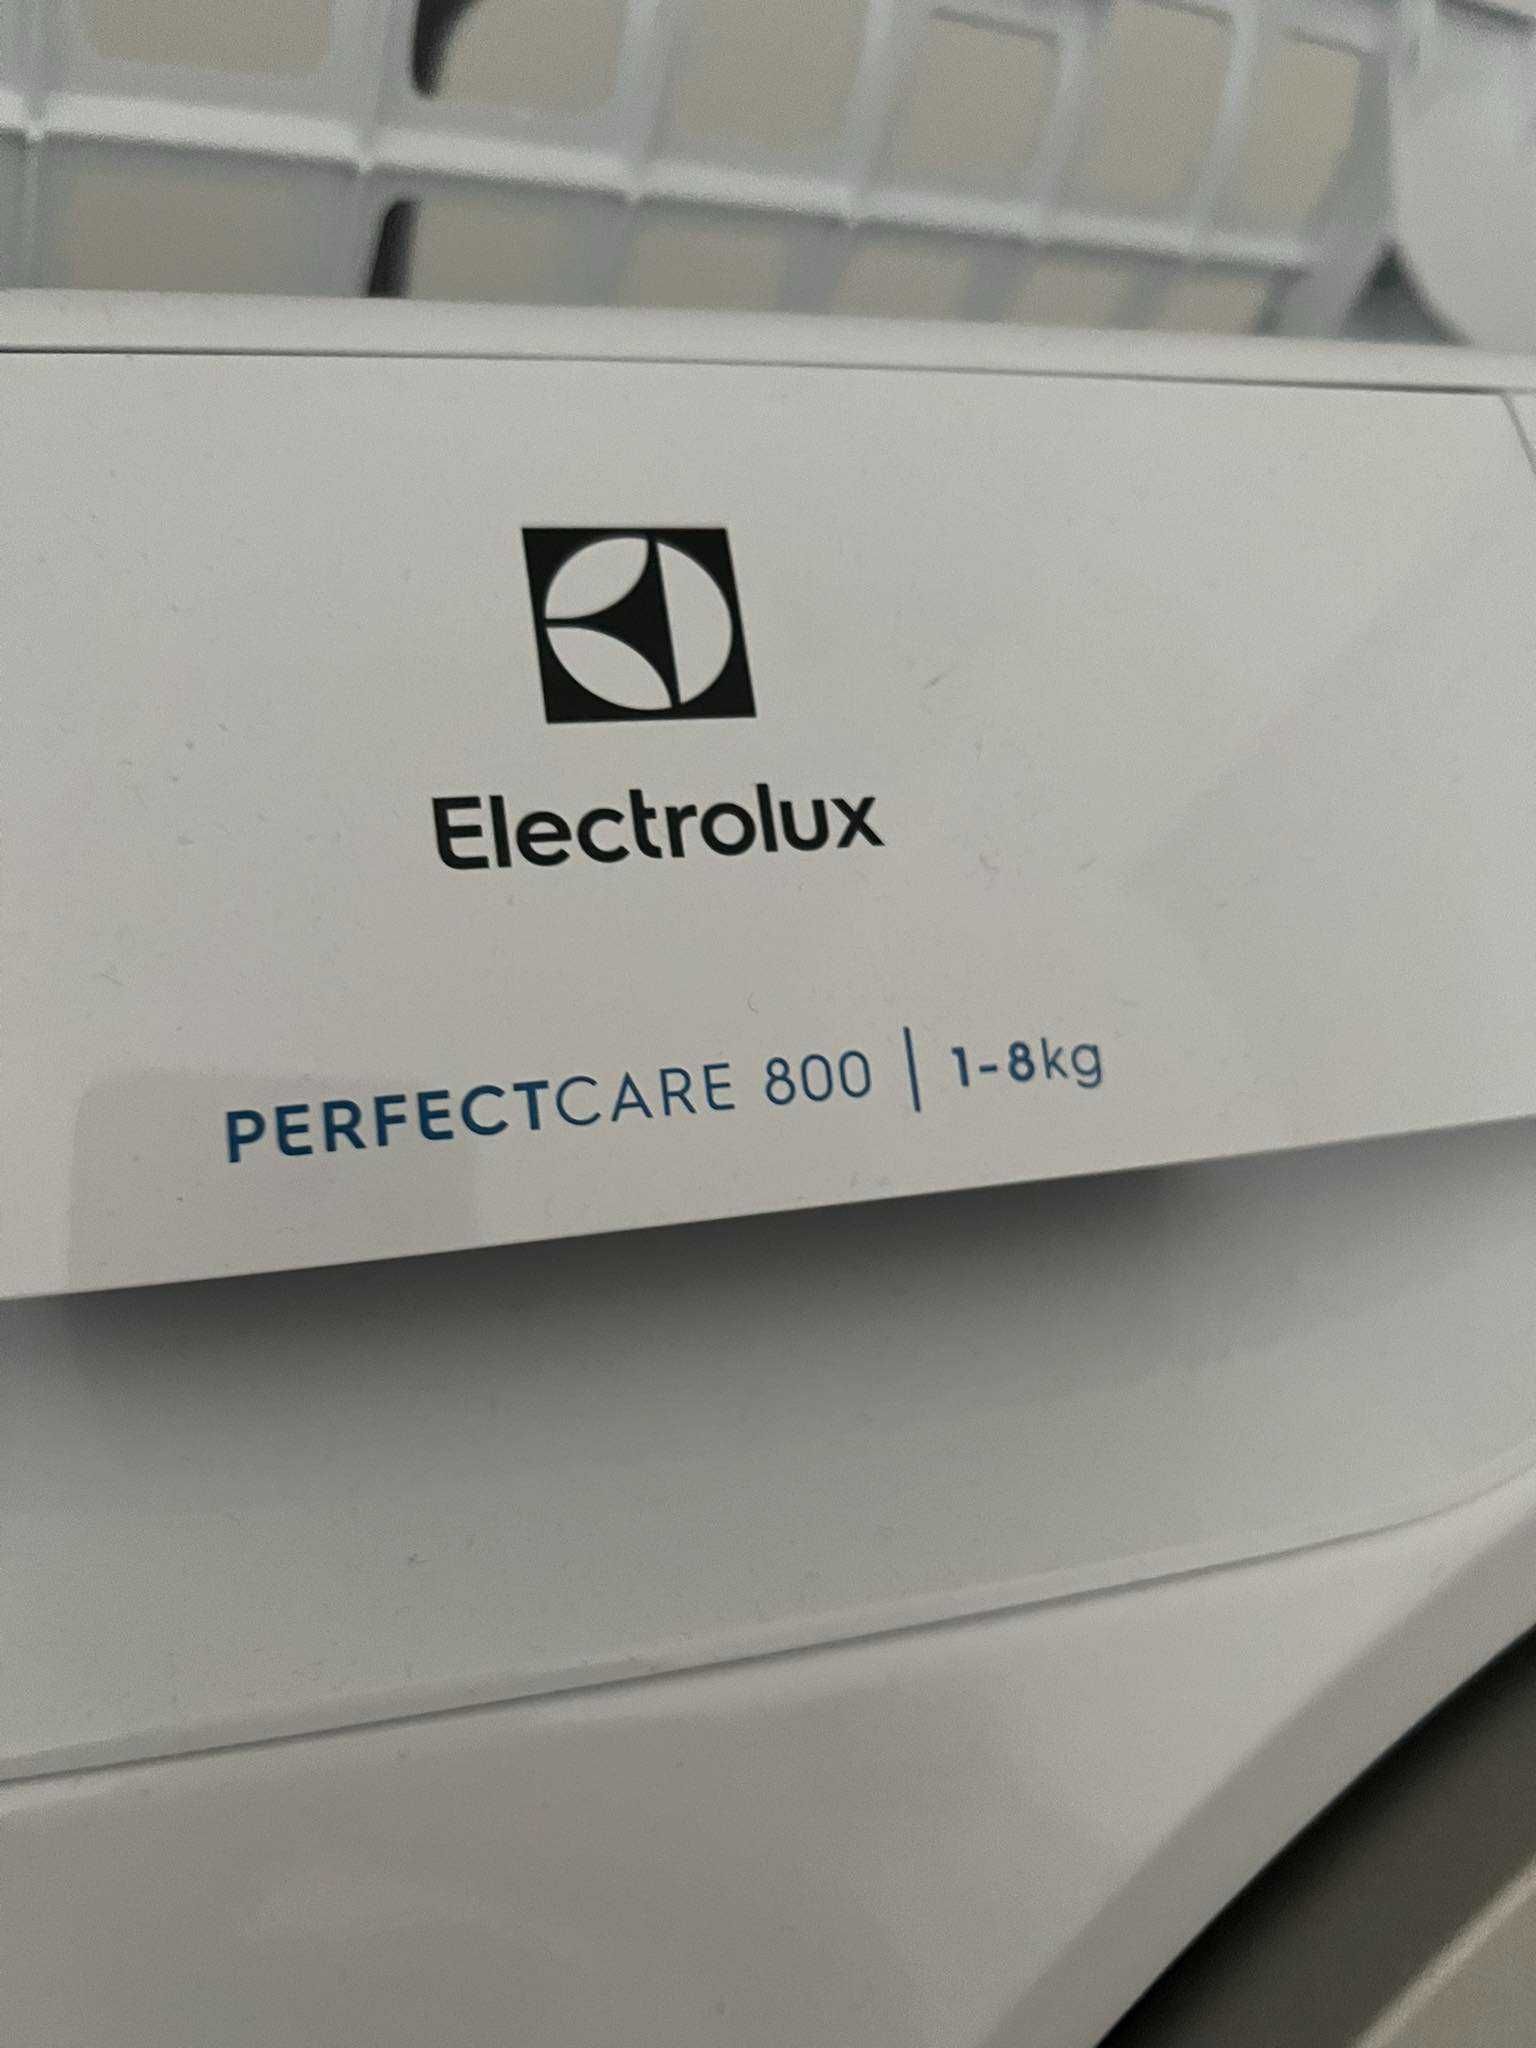 Suszarka do ubrań Electrolux Perfect care 800